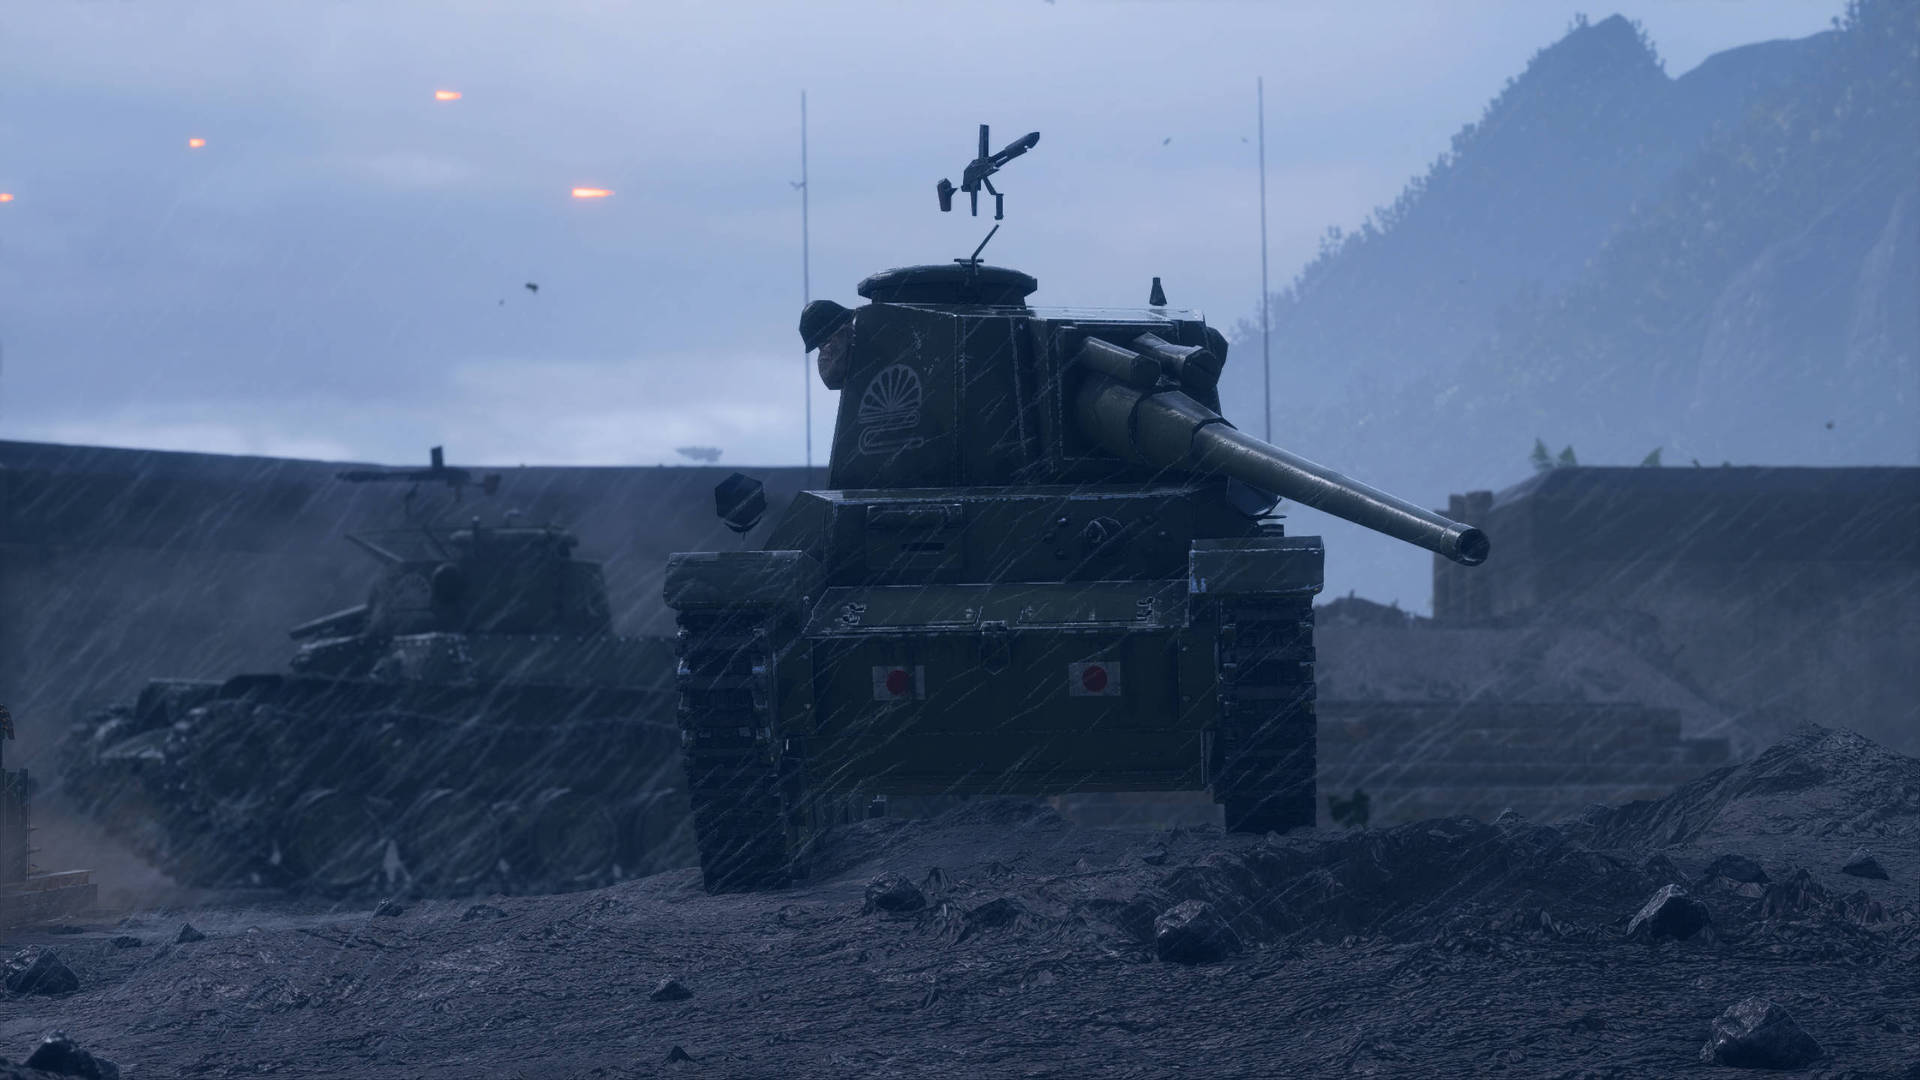 Battlefield 1 Hd Image Of Tanks